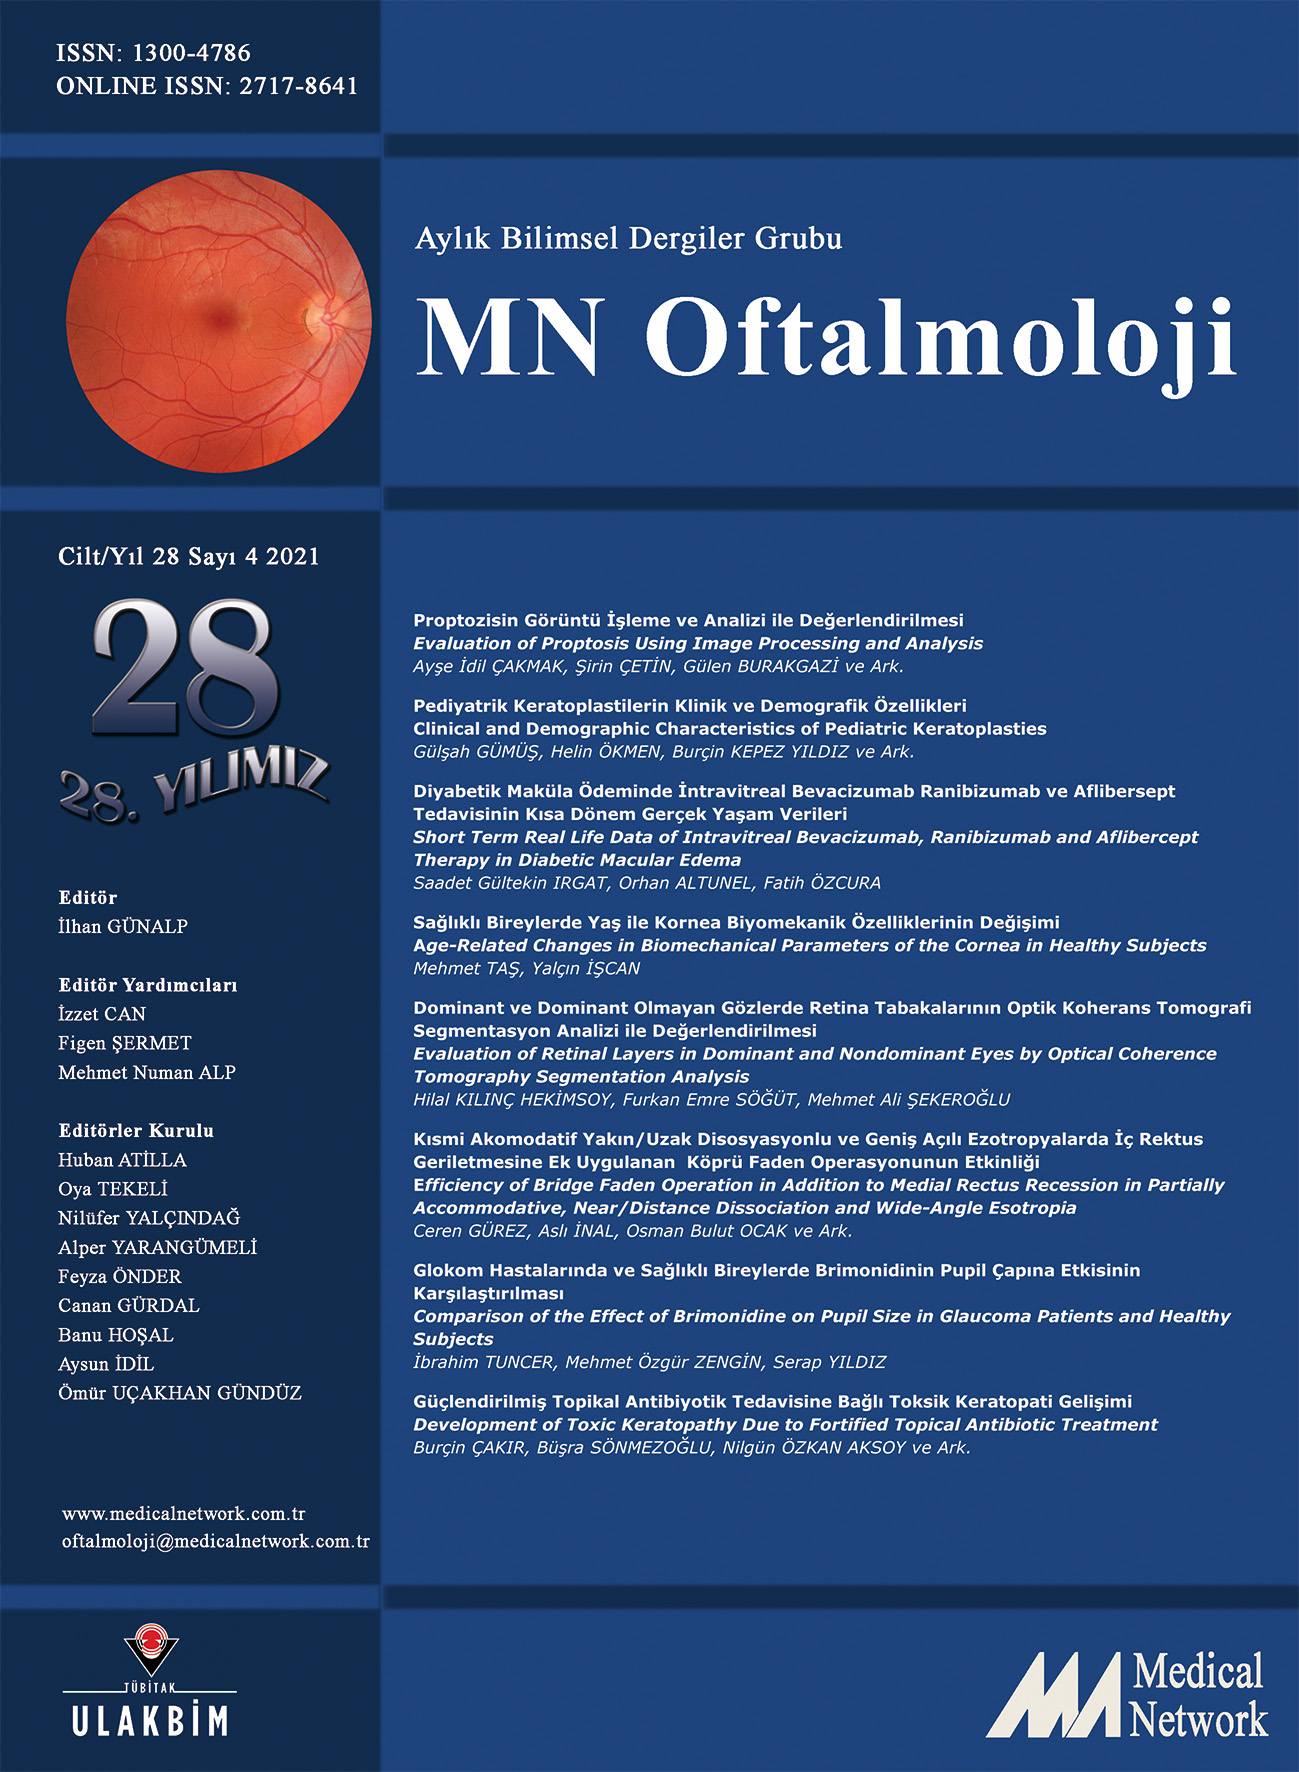 <p>MN Oftalmoloji Cilt: 28 Sayı: 4 2021 (MN Ophthalmology Volume: 28 No: 4 2021)</p>